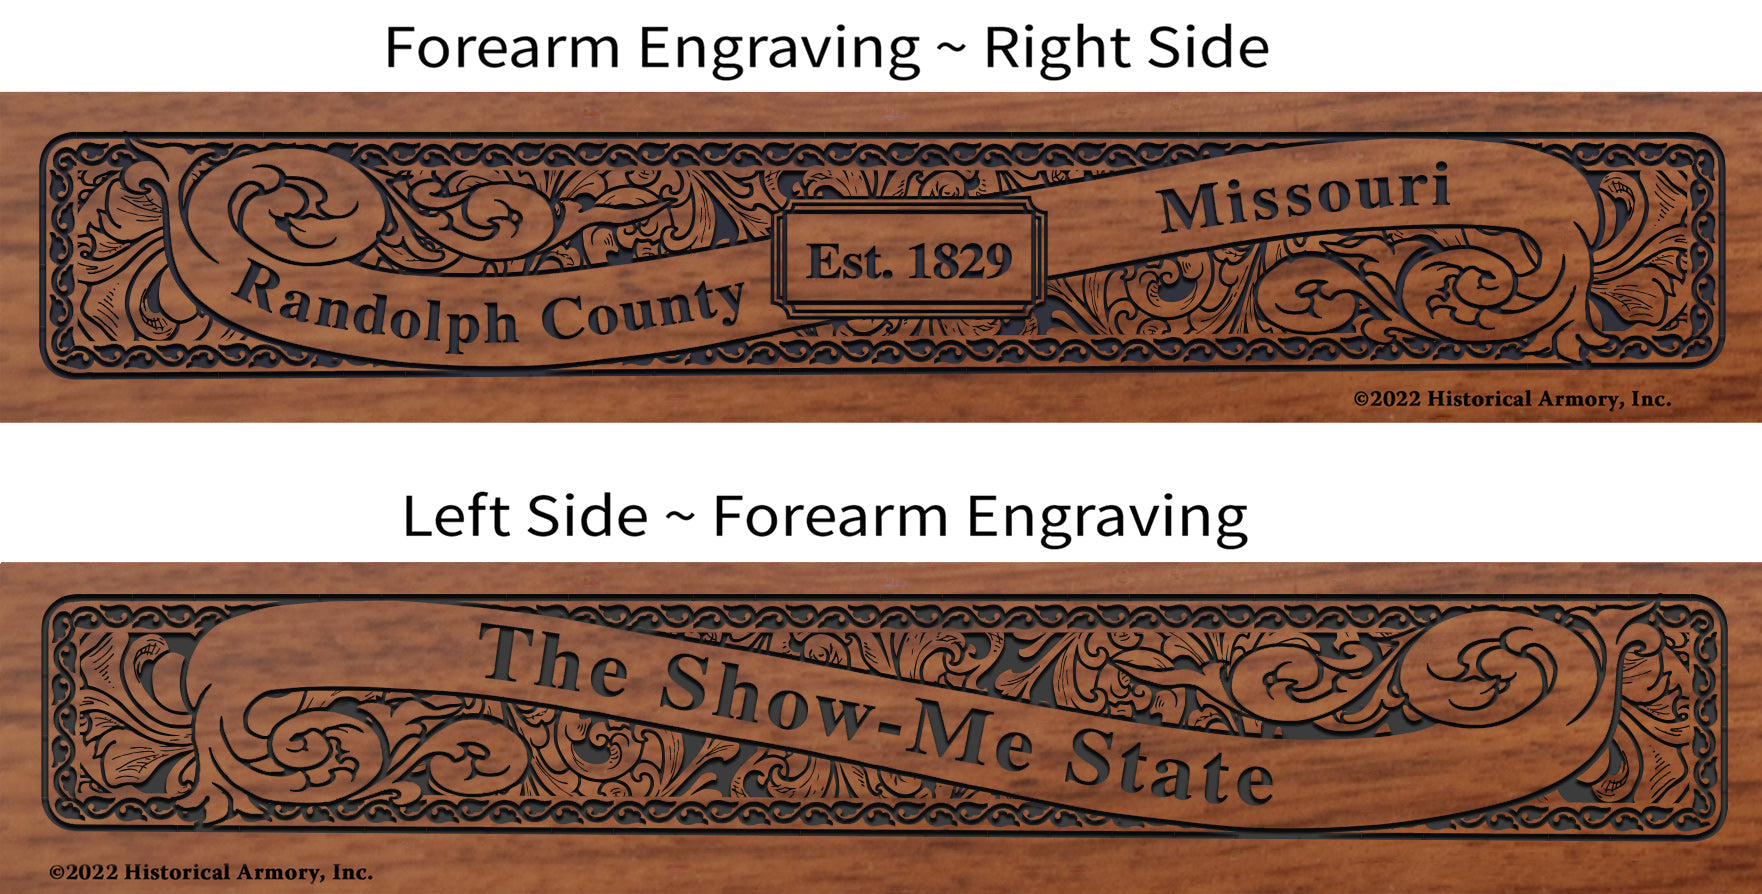 Randolph County Missouri Engraved Rifle Forearm